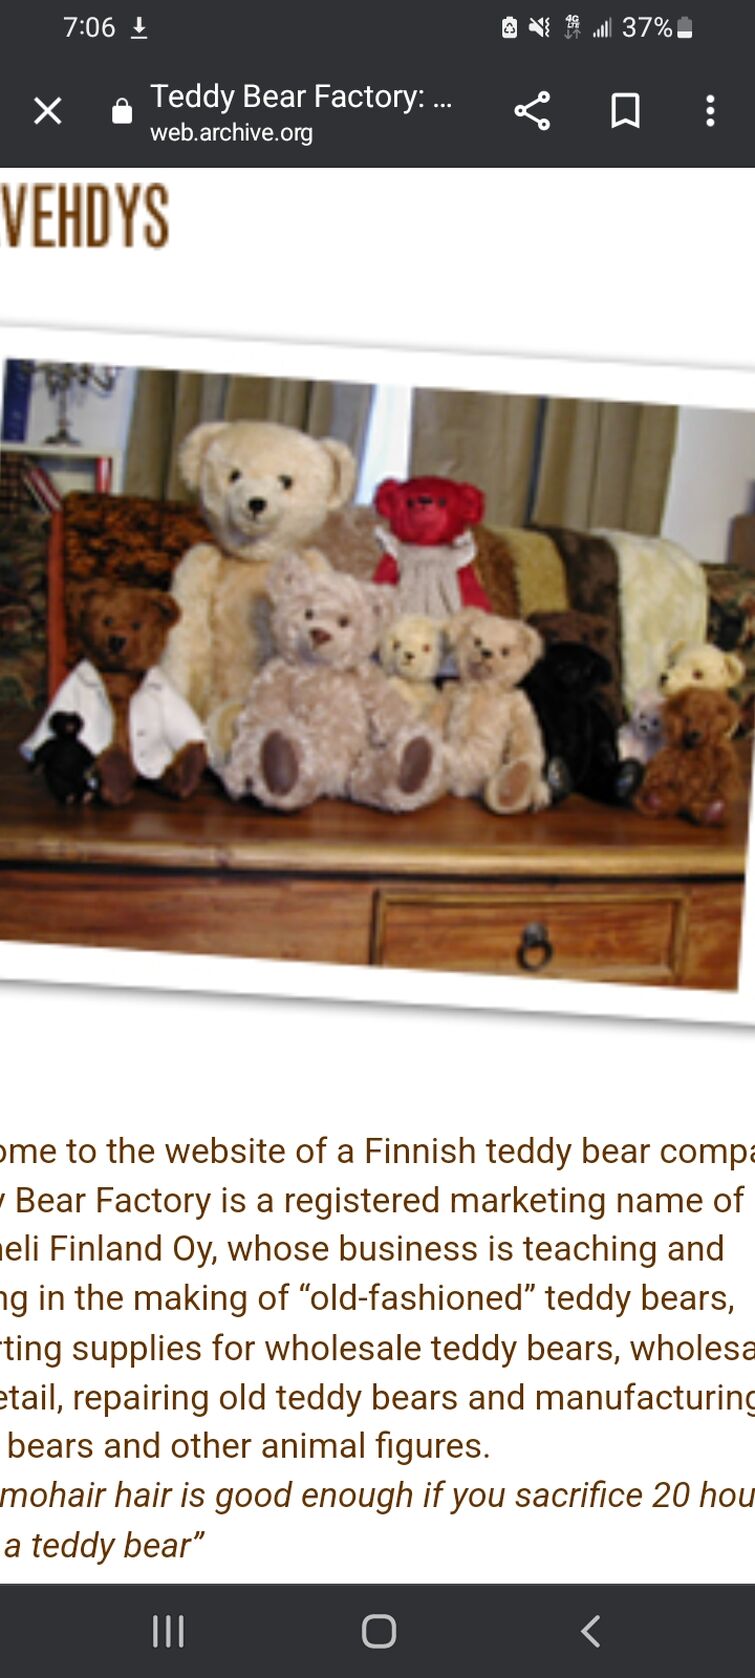 a Bear Factory Fluffy Fun Bear from 2001